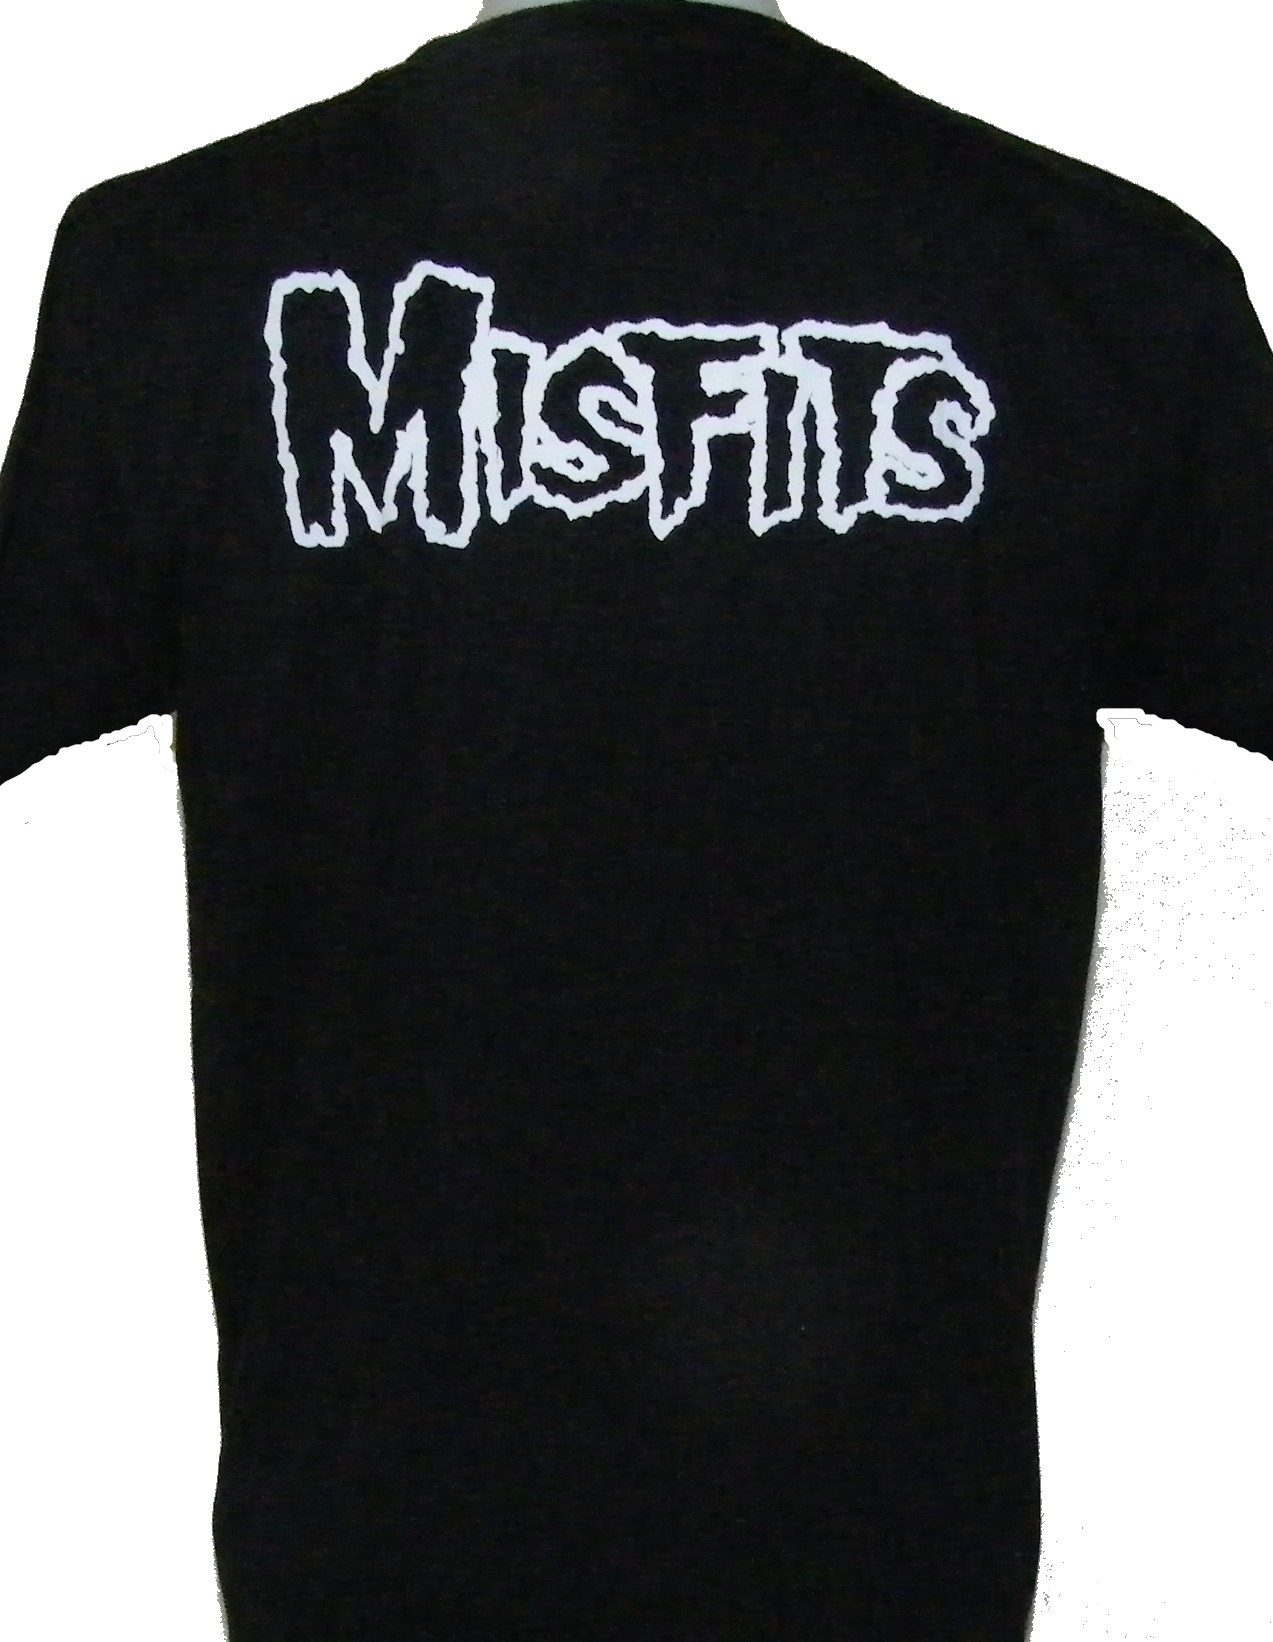 Misfits t-shirt size S – RoxxBKK